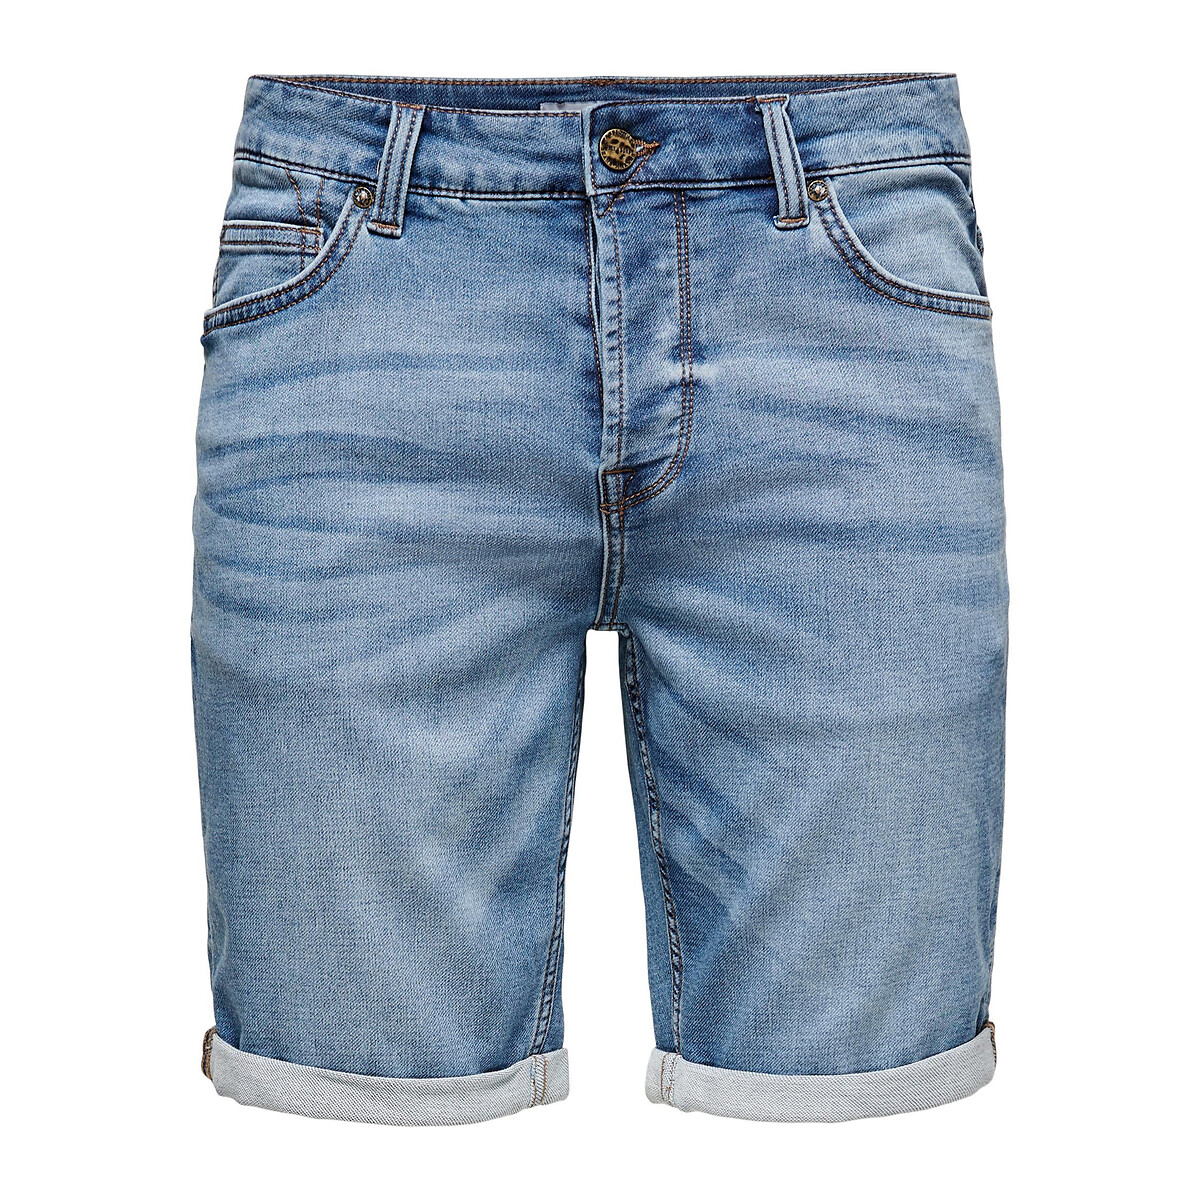 Шорты Из джинсовой ткани Ply L синий LaRedoute, размер L - фото 5